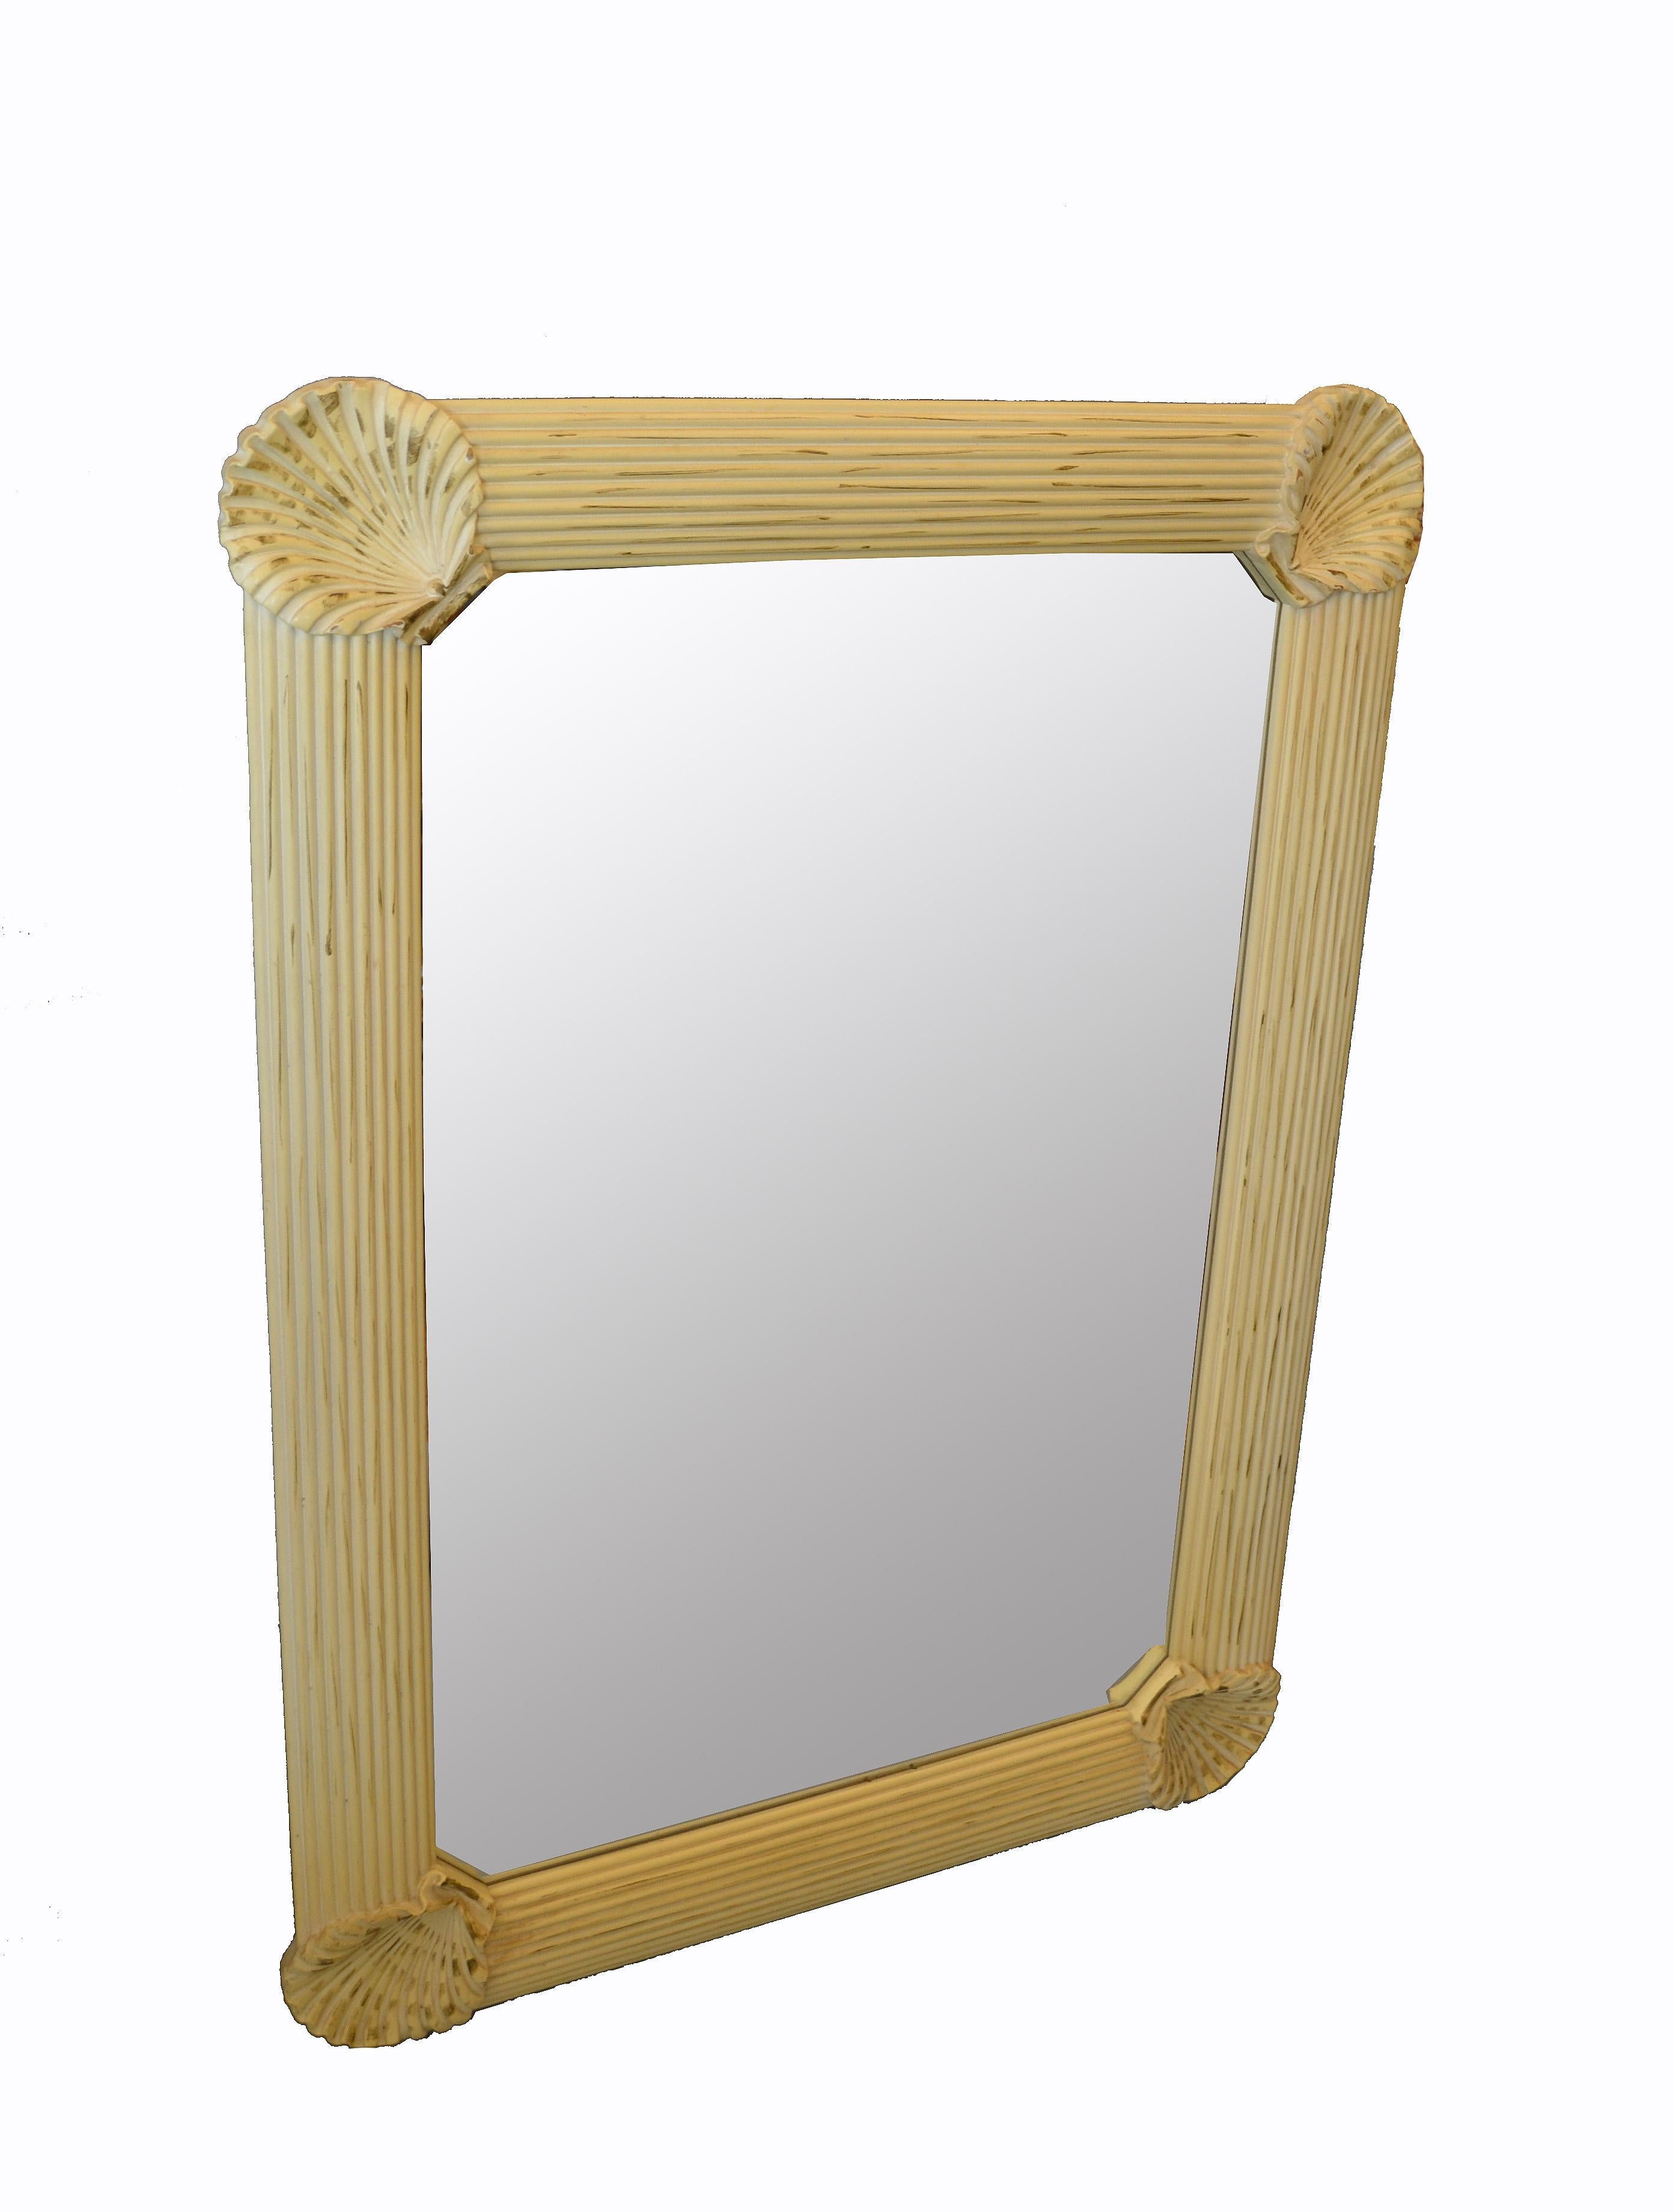 American Hollywood Regency Nautical Wooden Rectangular Tan Seashell Beveled Wall Mirror  For Sale